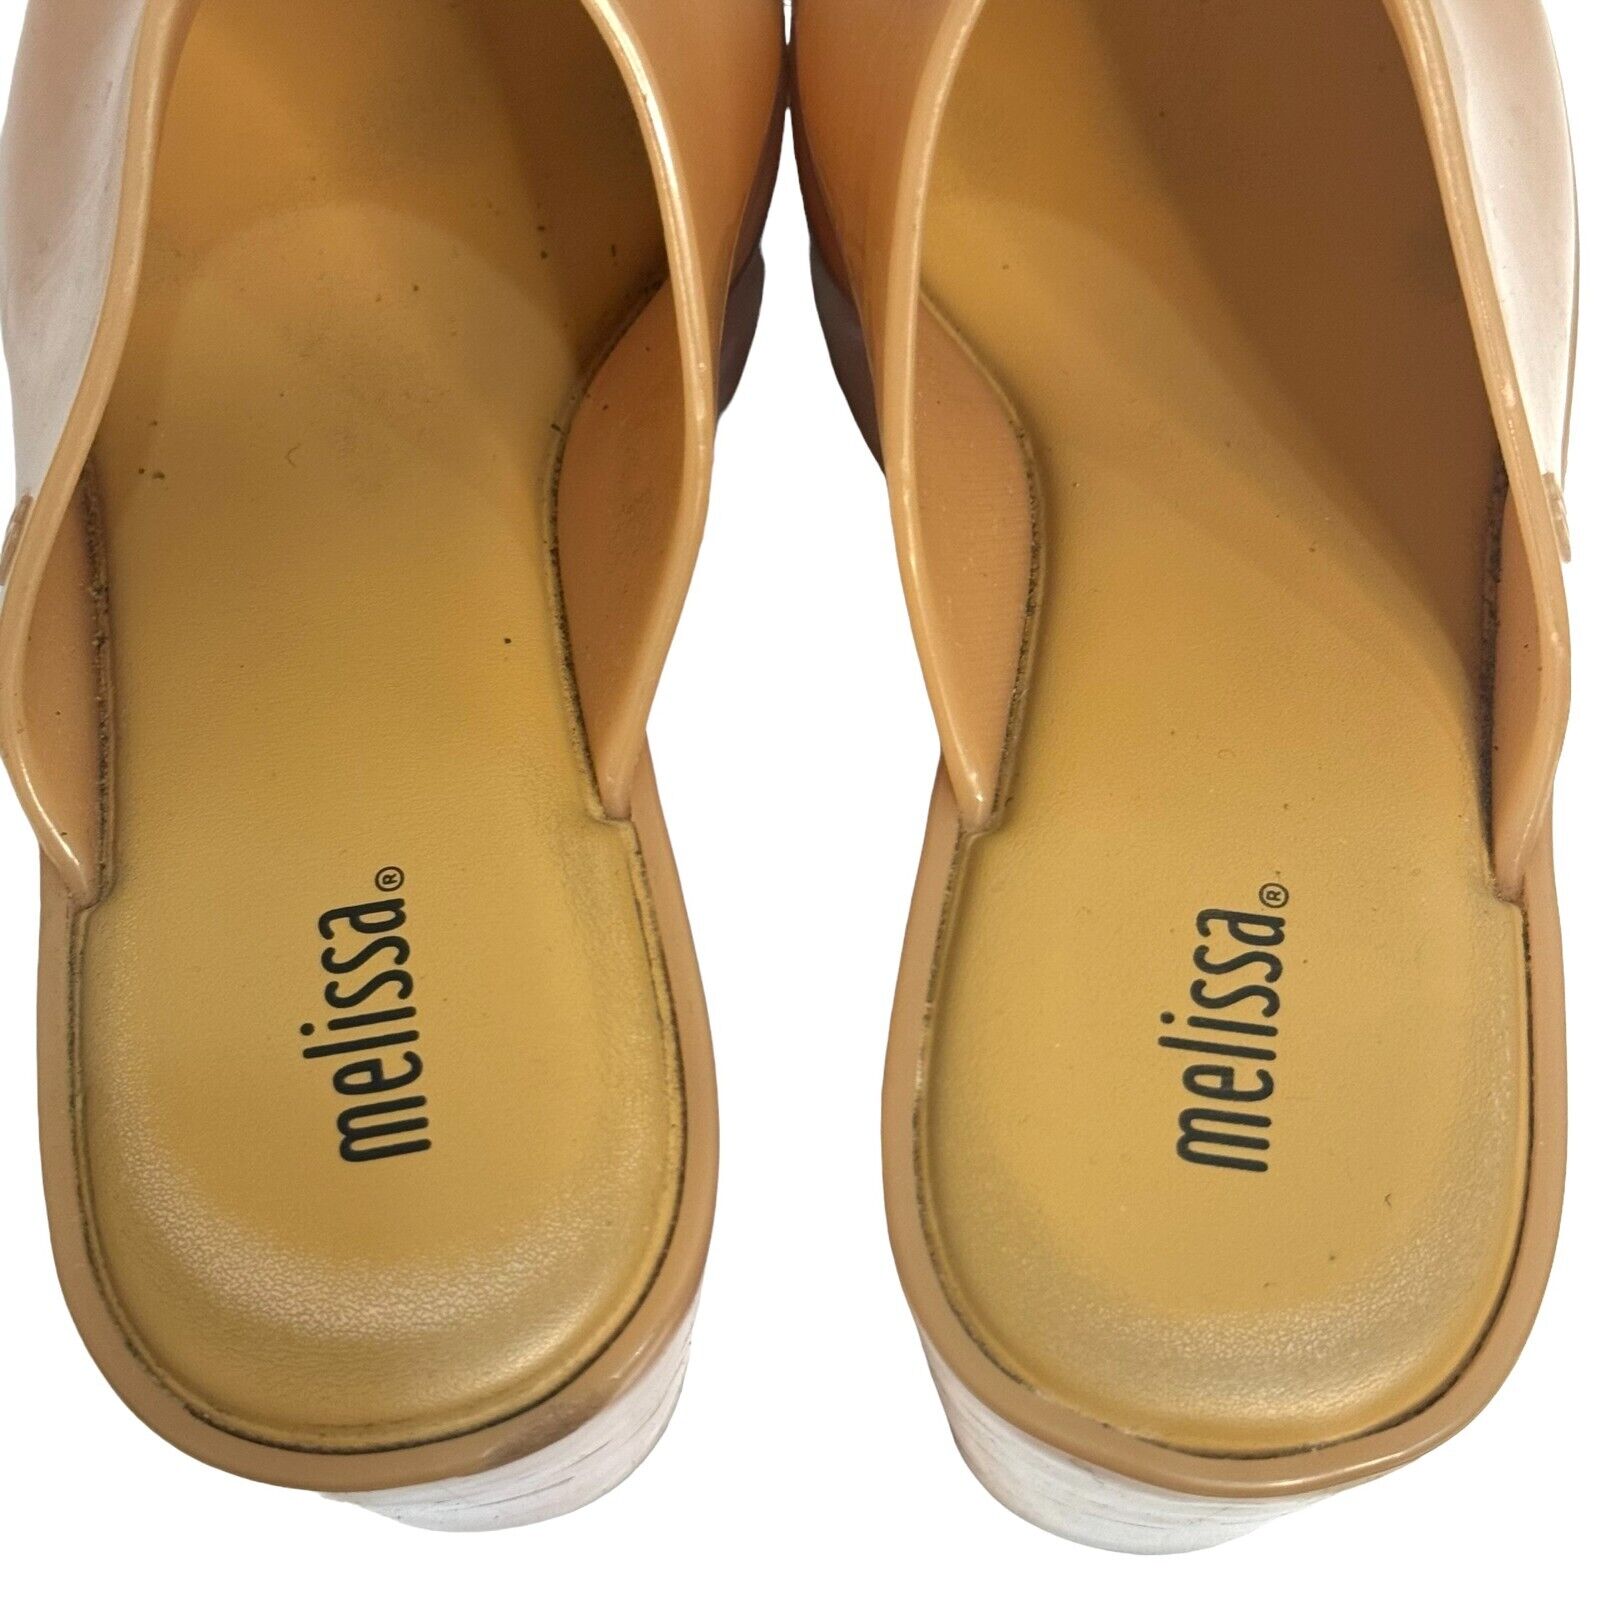 Melissa Posh Jelly Beige Platform Block Heel Sandals Size 8